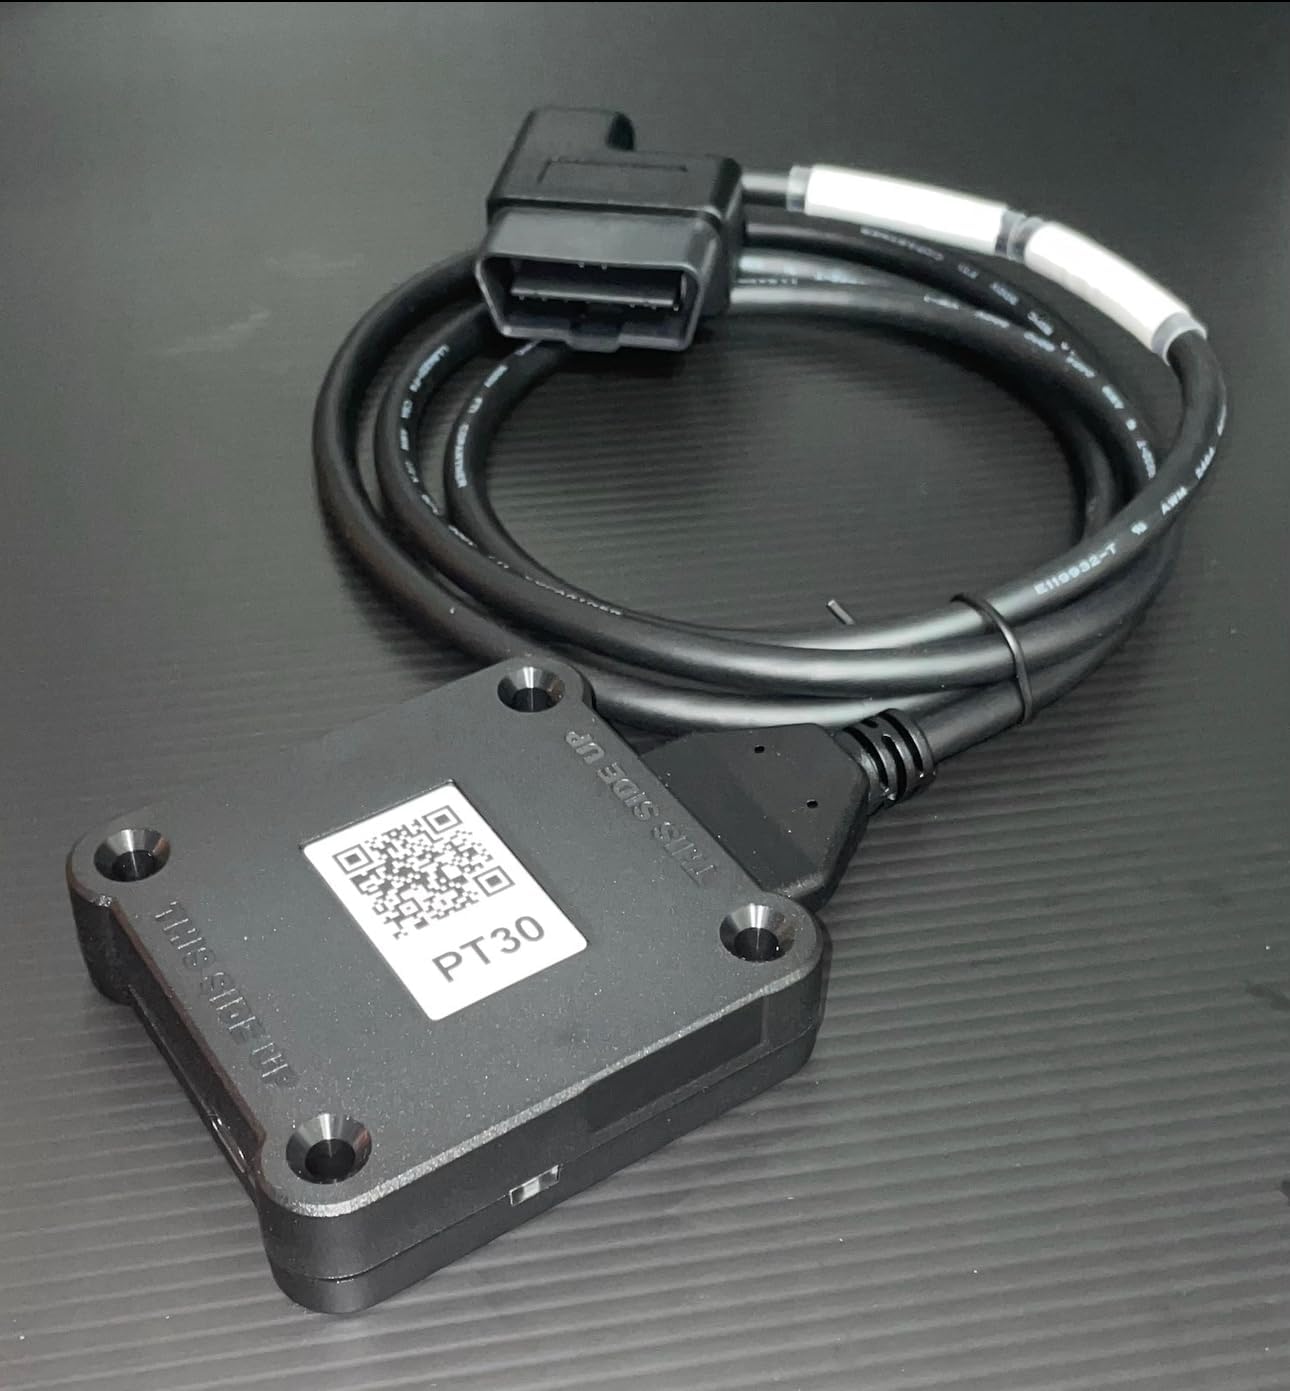 PT30 HOS Device-LogBook-FMCSA/DOT Certified Bundle (Pick Cable Below)